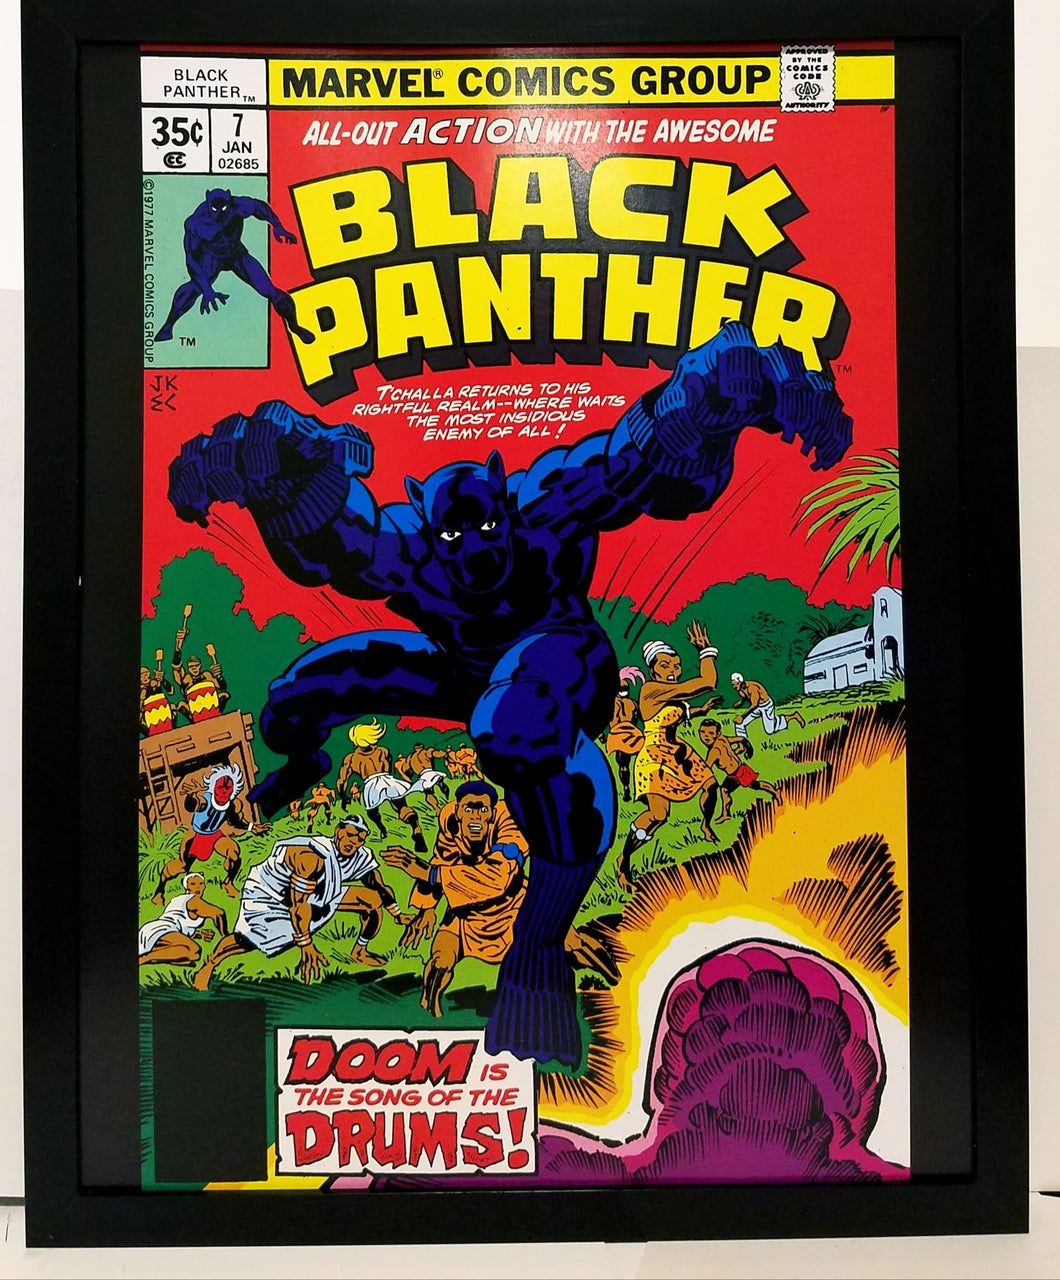 Black Panther #7 by Jack Kirby 11x14 FRAMED Marvel Comics Art Print Poster